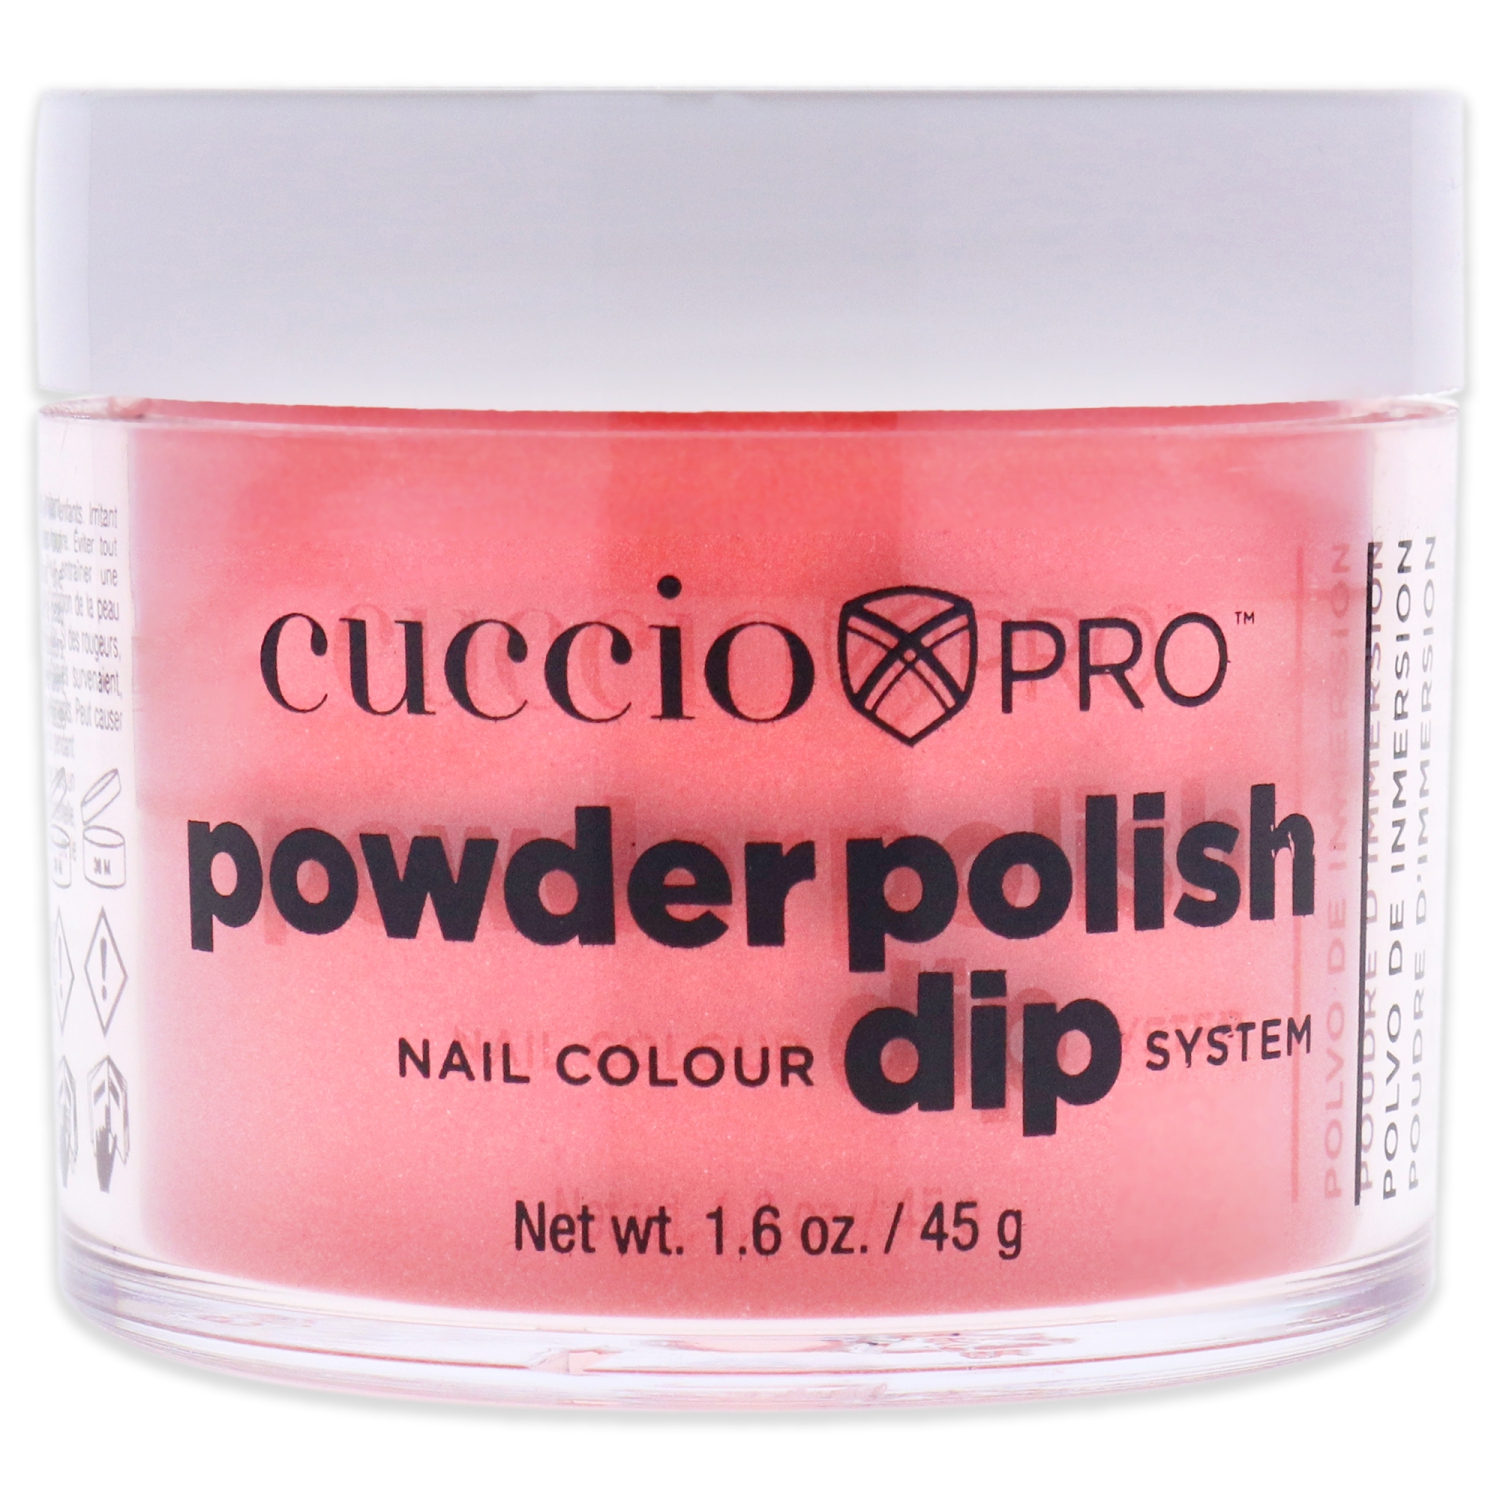 Pro Powder Polish Nail Colour Dip System - Chillin In Chile by Cuccio for Women - 1.6 oz Nail Powder